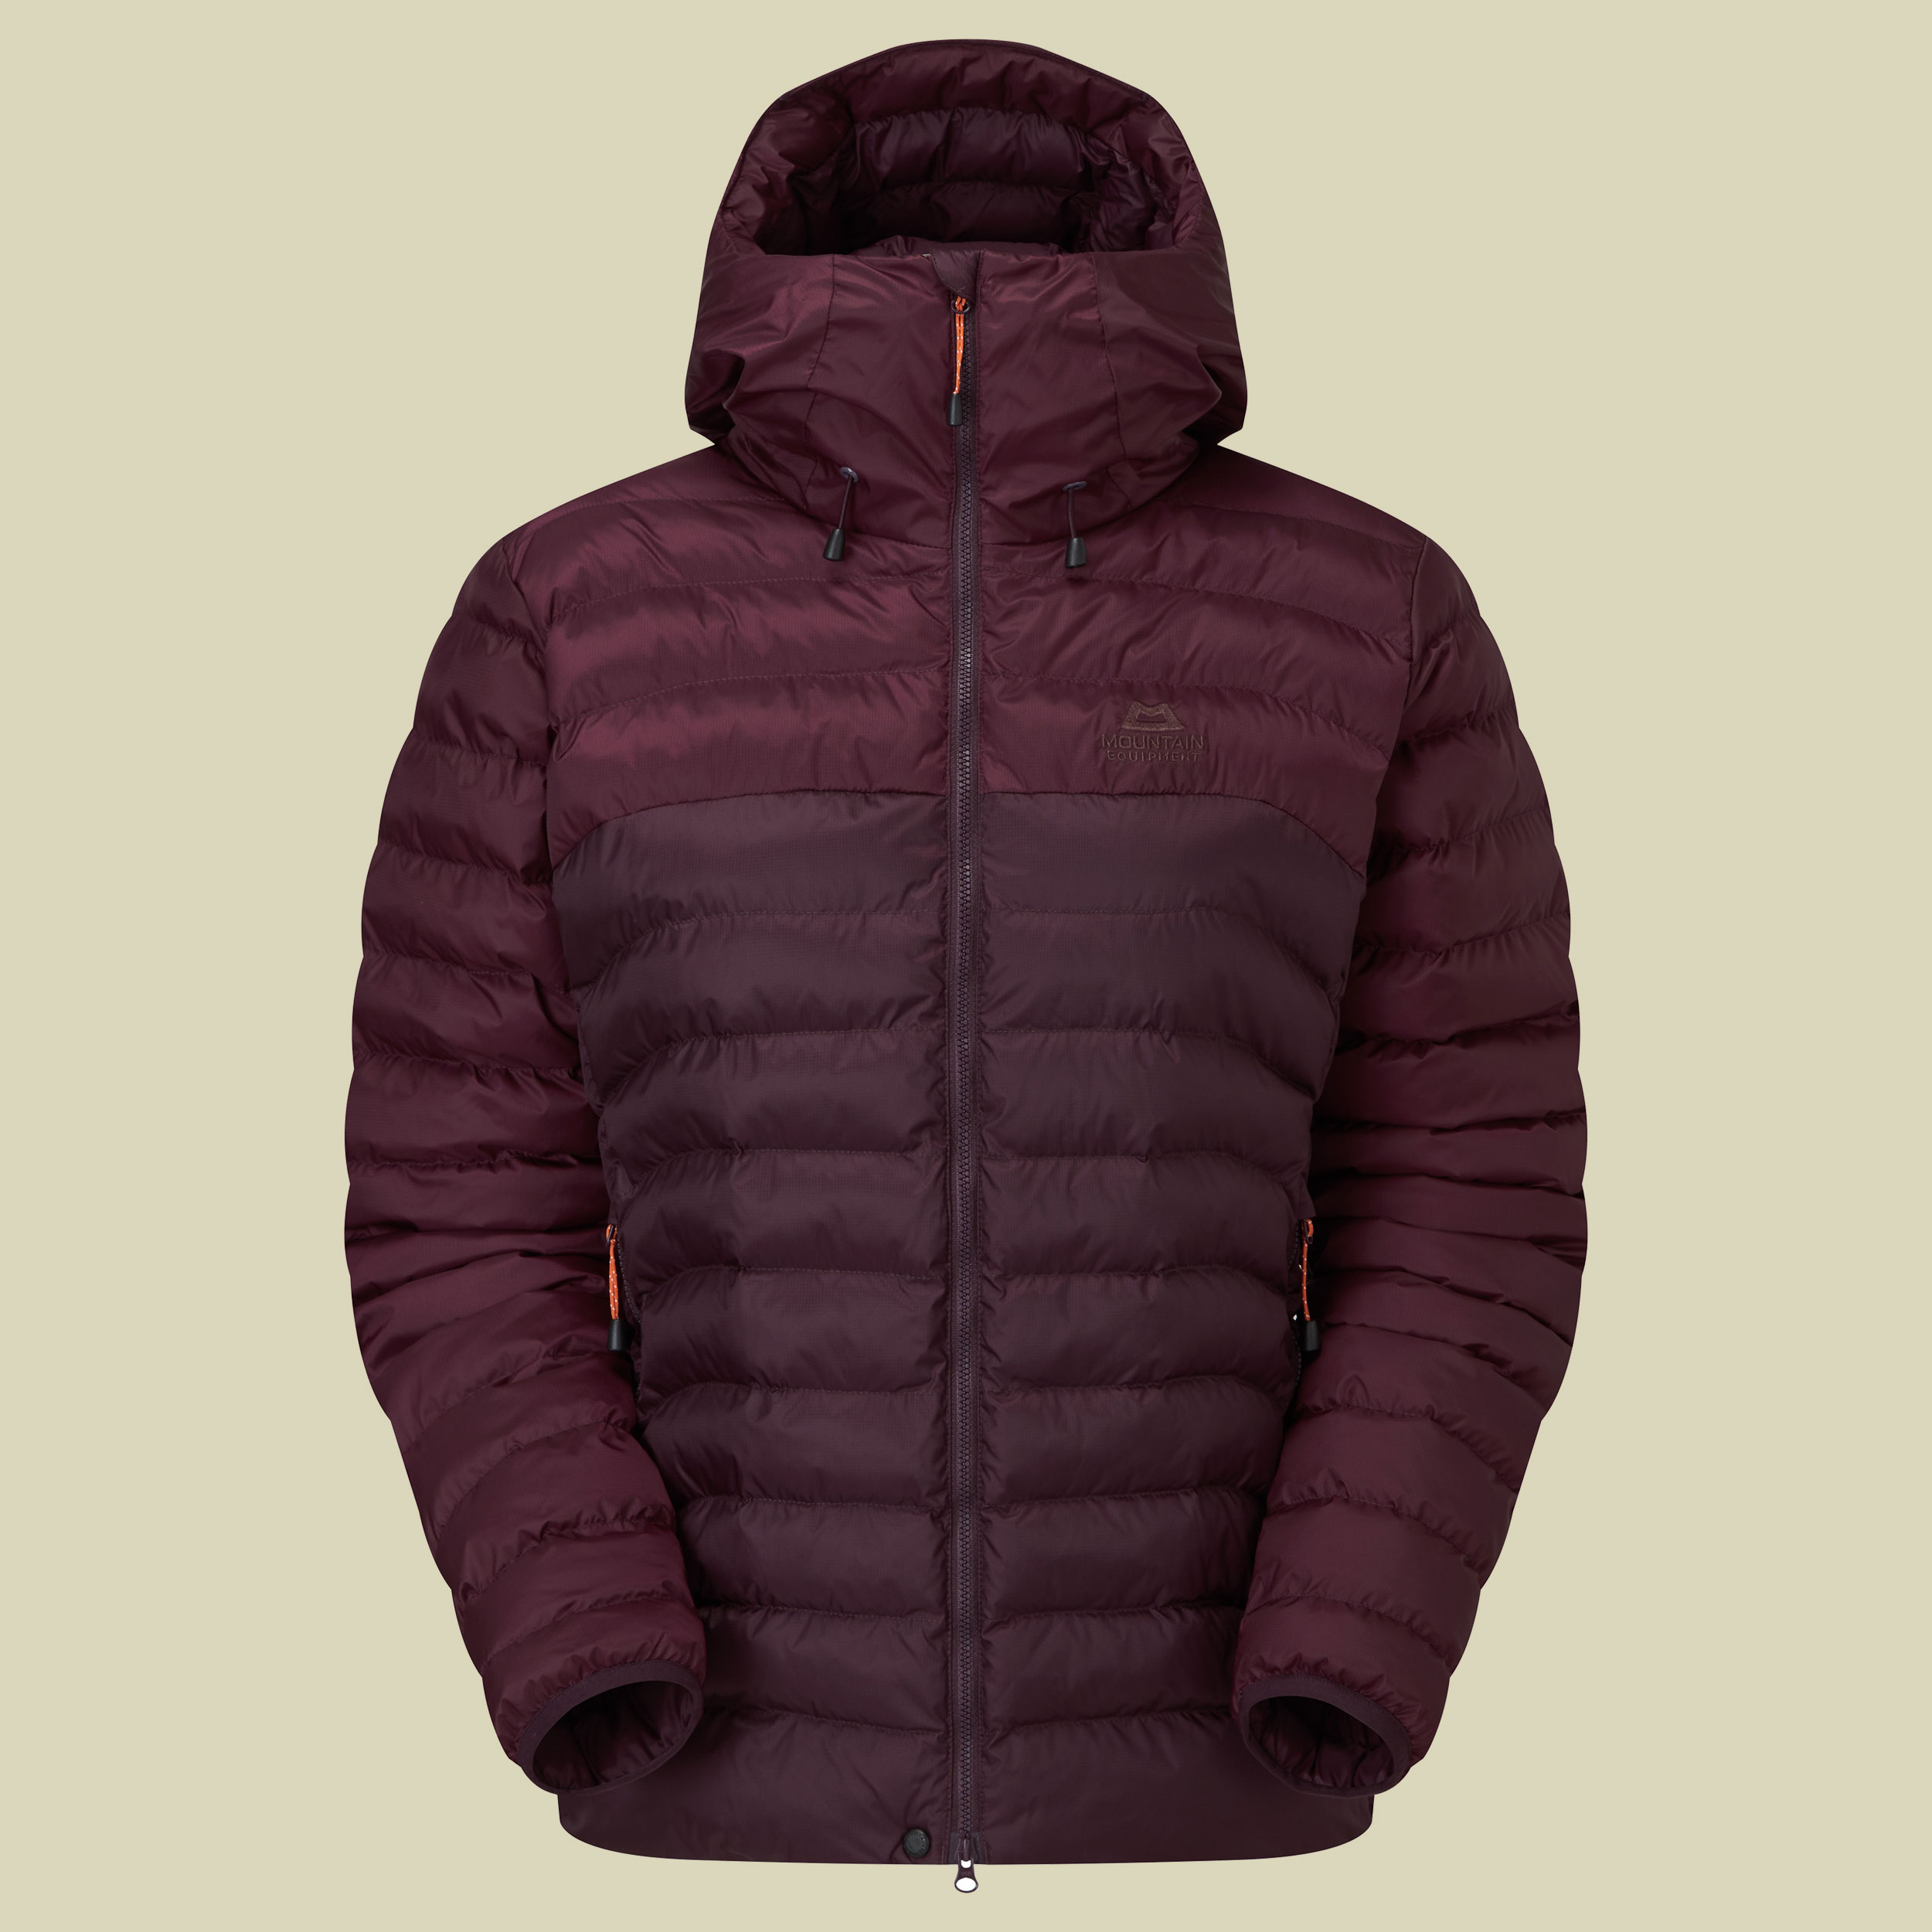 Superflux Jacket Women Größe L (14) Farbe raisin/mulberry